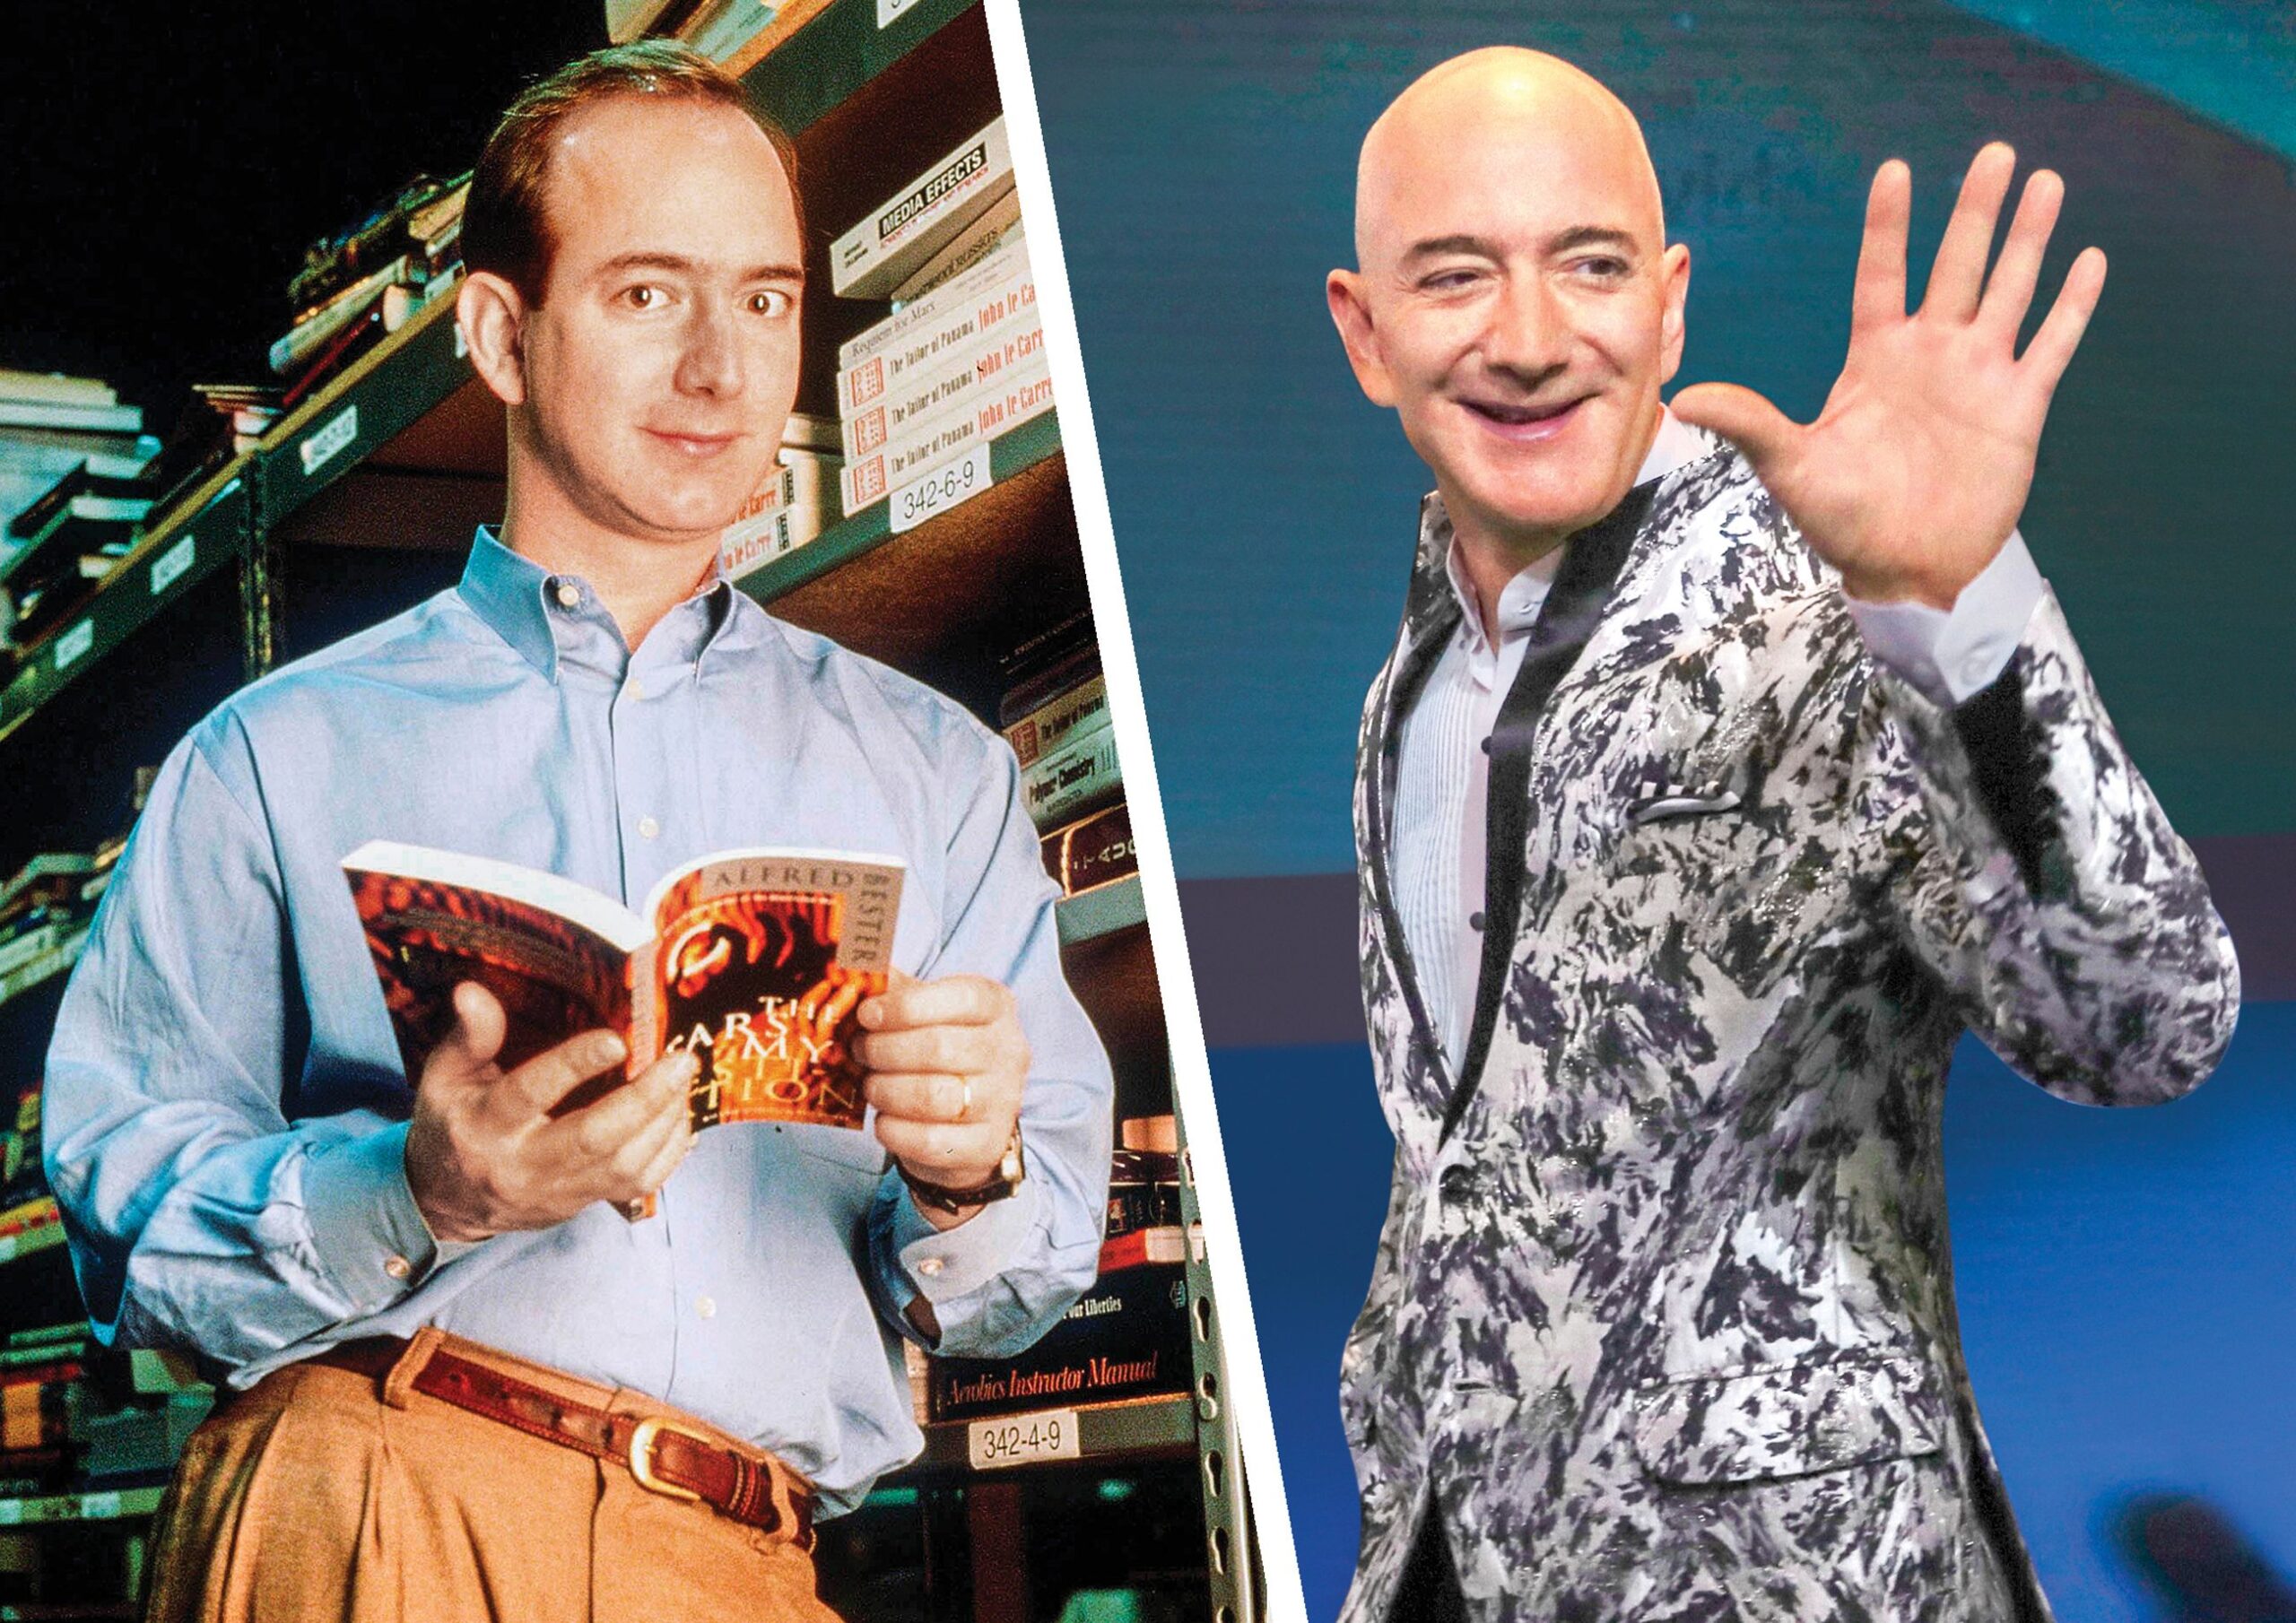 Jeff Bezos with hair vs bald